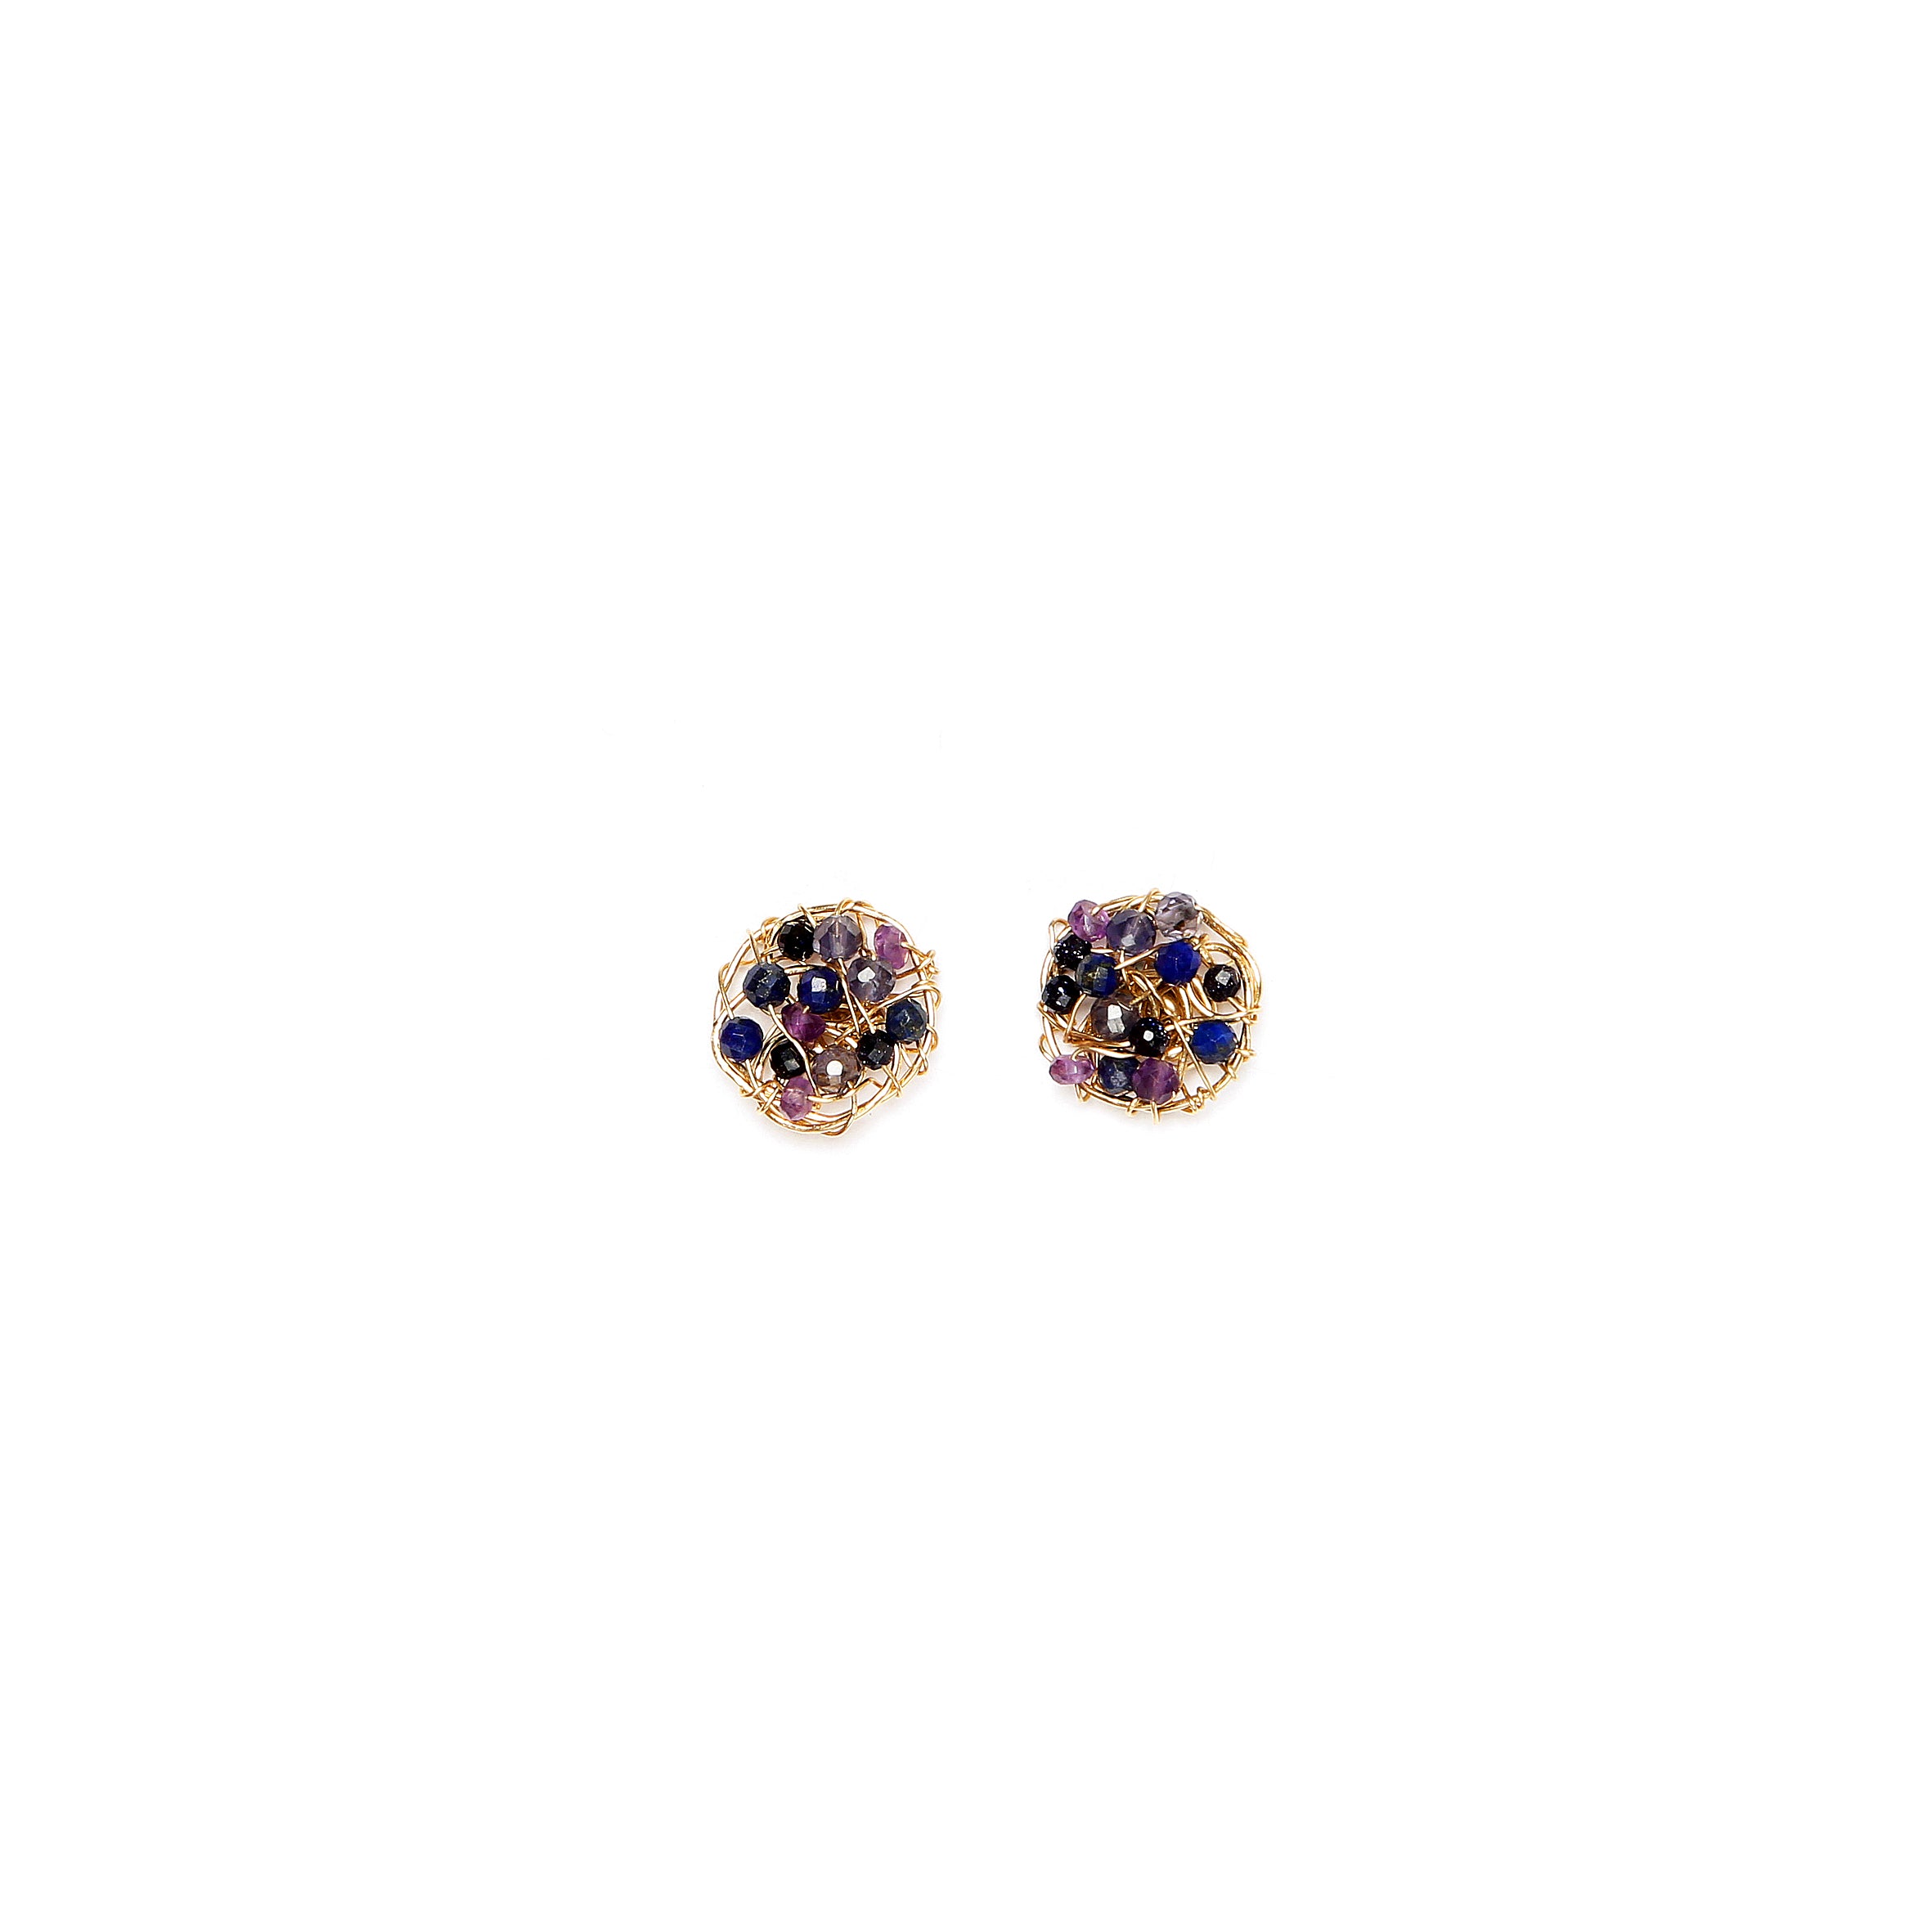 Aura Stud Earrings #1 (10mm) - Blue Mix Gems Earrings TARBAY   